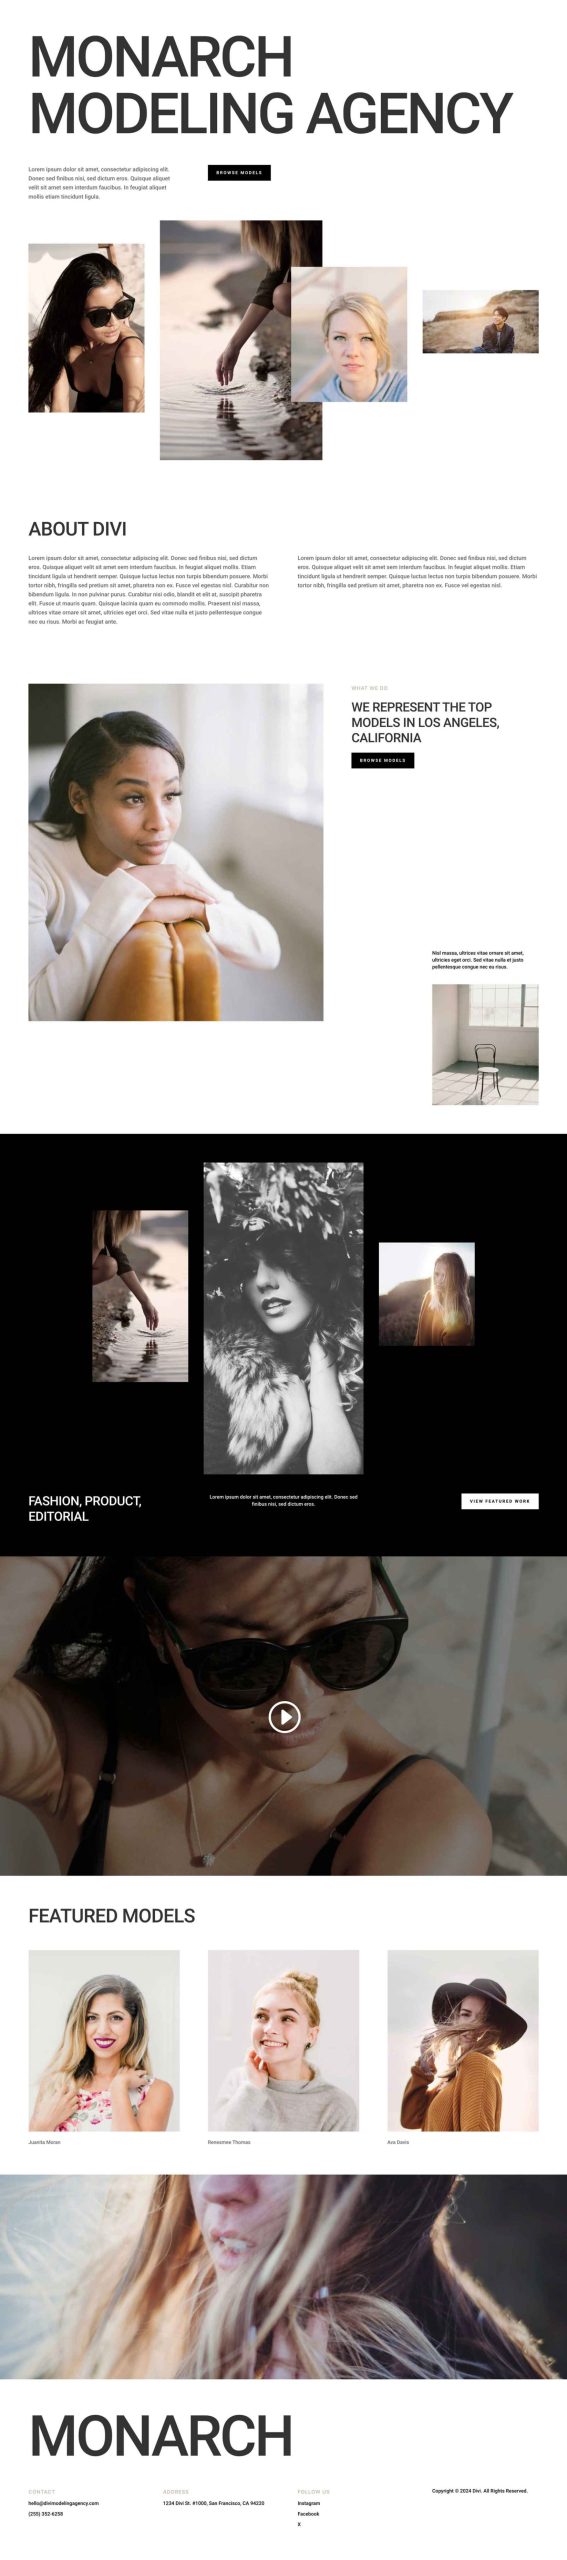 Model agency website with Divi 